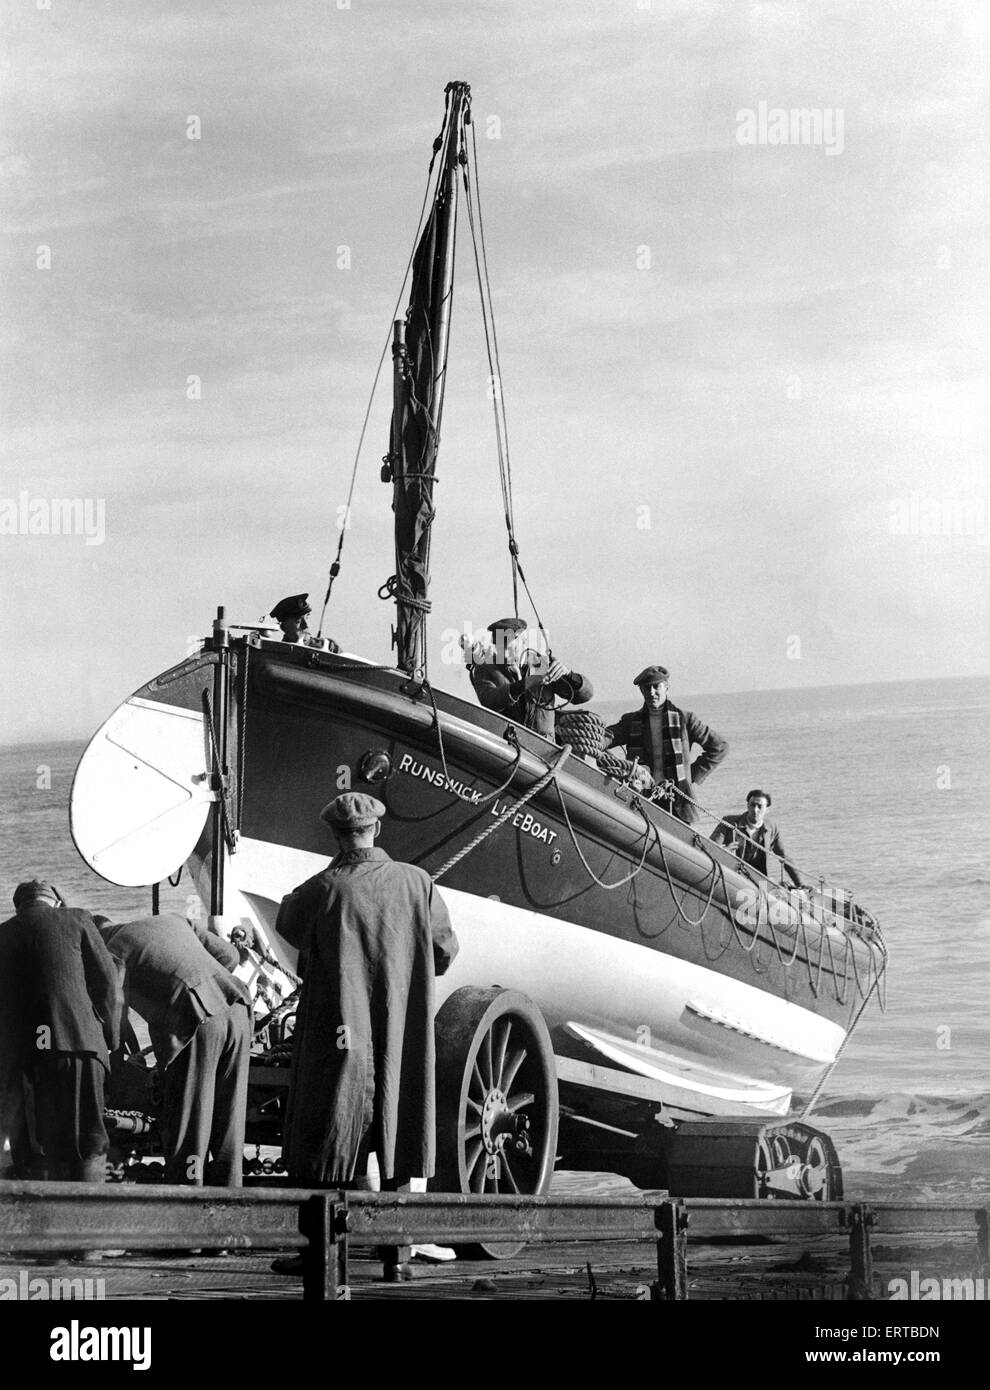 Une embarcation à runswick. Novembre 1951. Banque D'Images